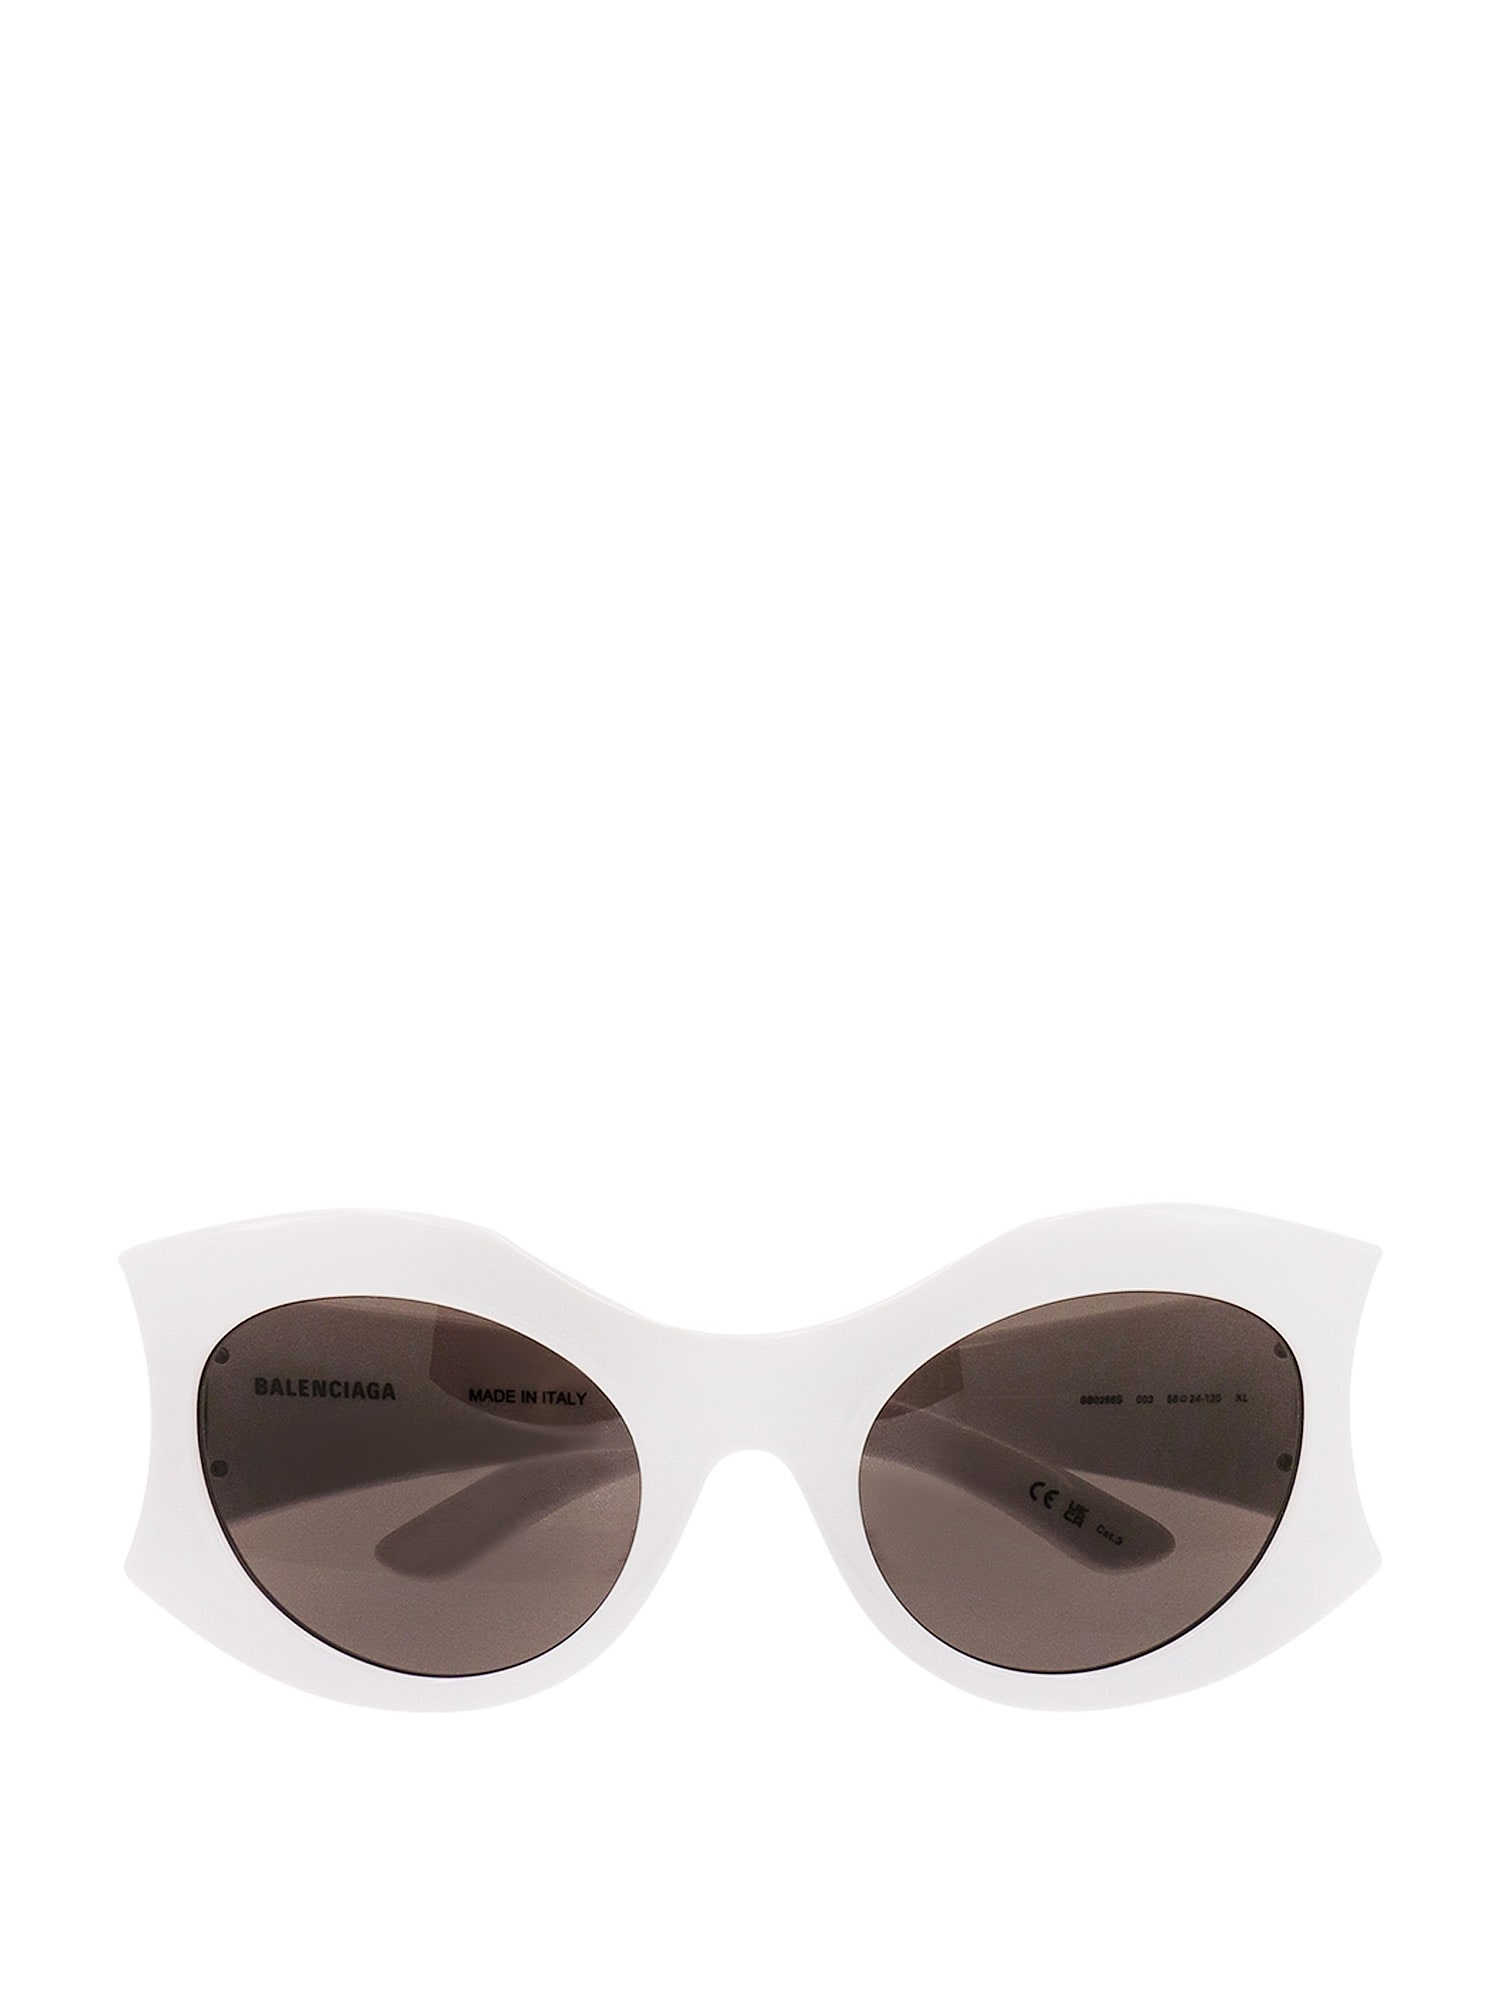 Balenciaga BB0230S001 Sunglasses Woman  Shop Online  Free Shipping